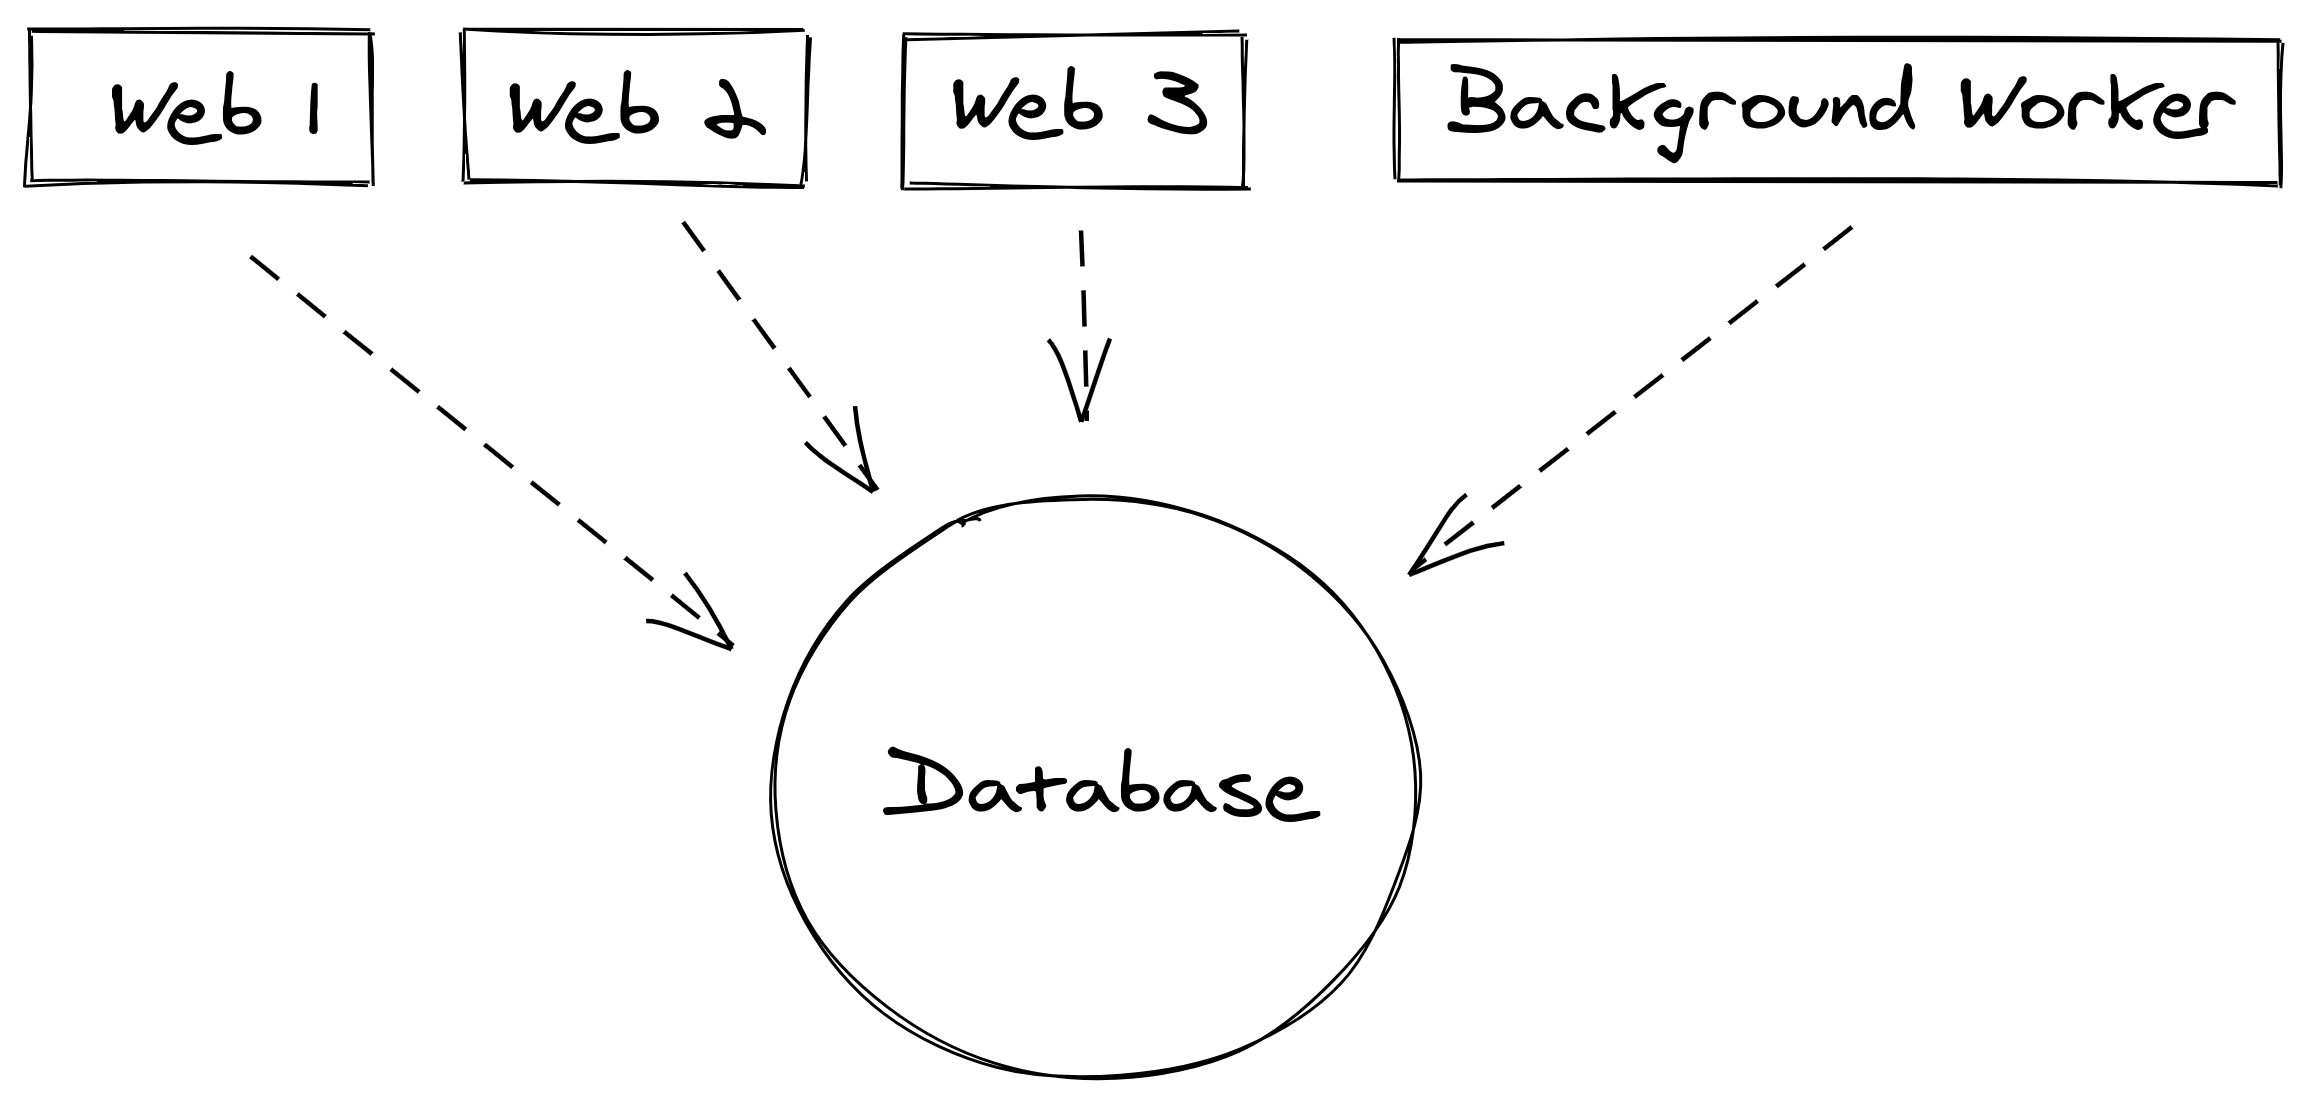 Database load